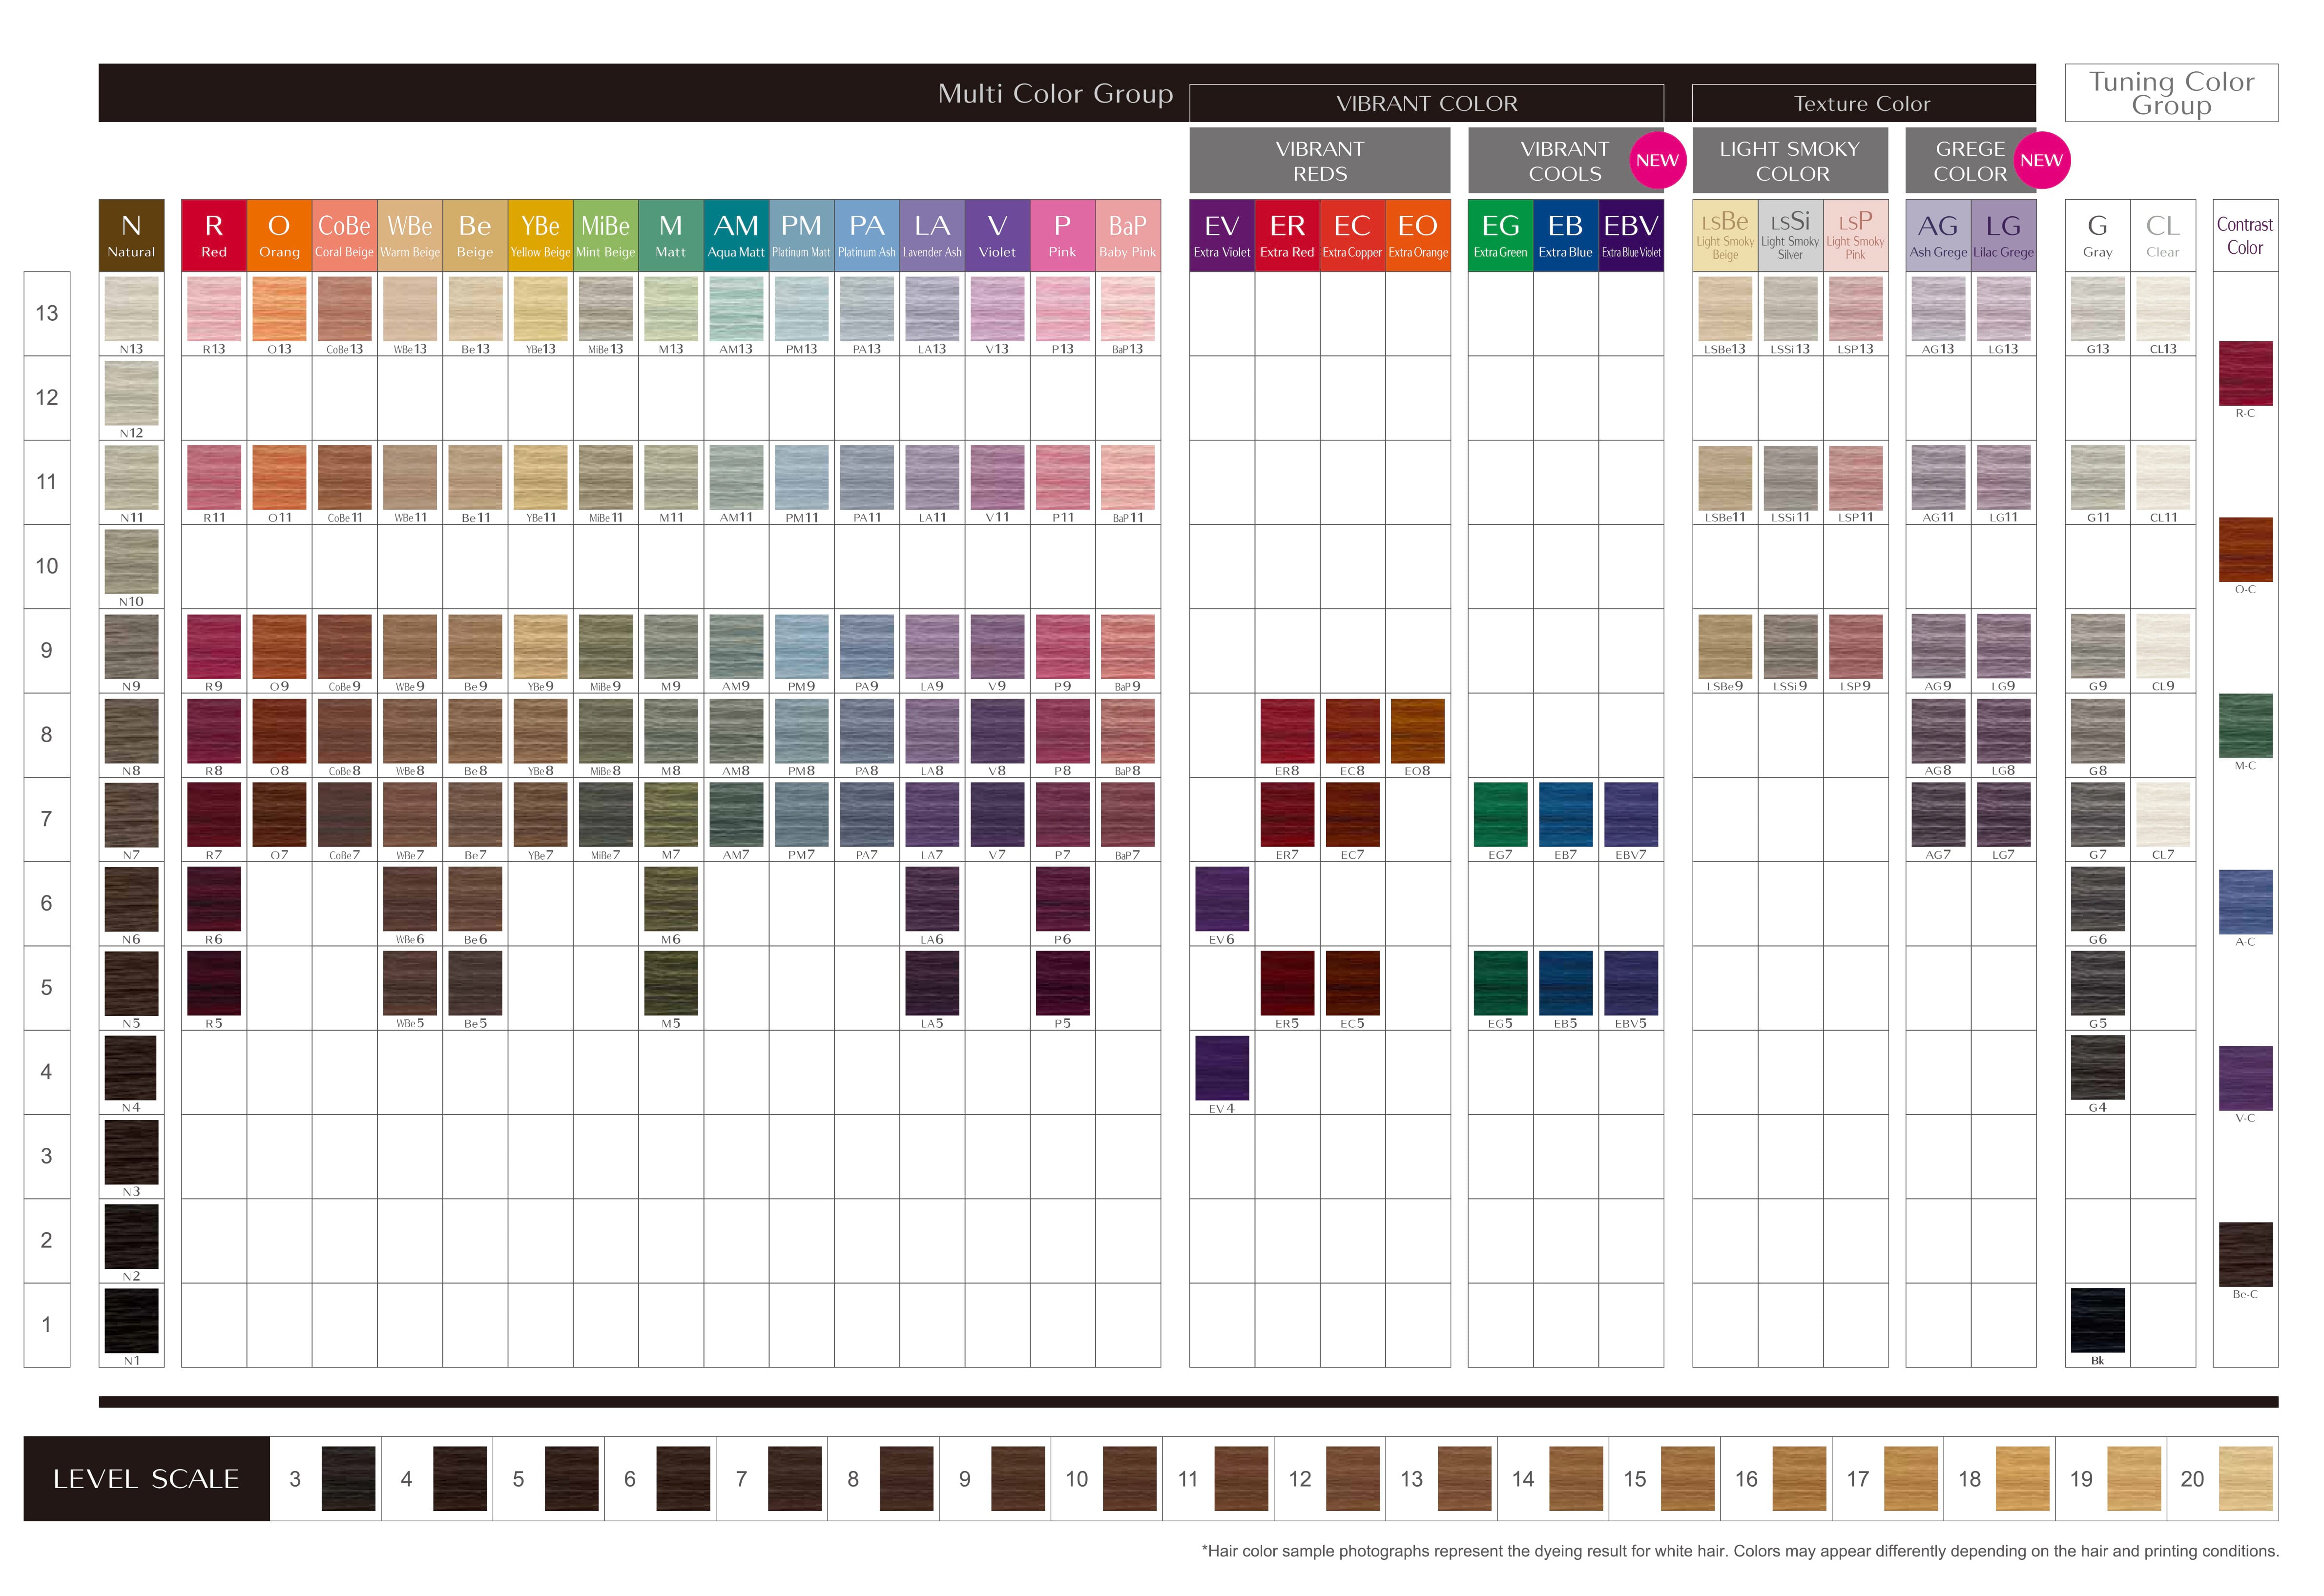 Shiseido Hair Dye Colour Chart